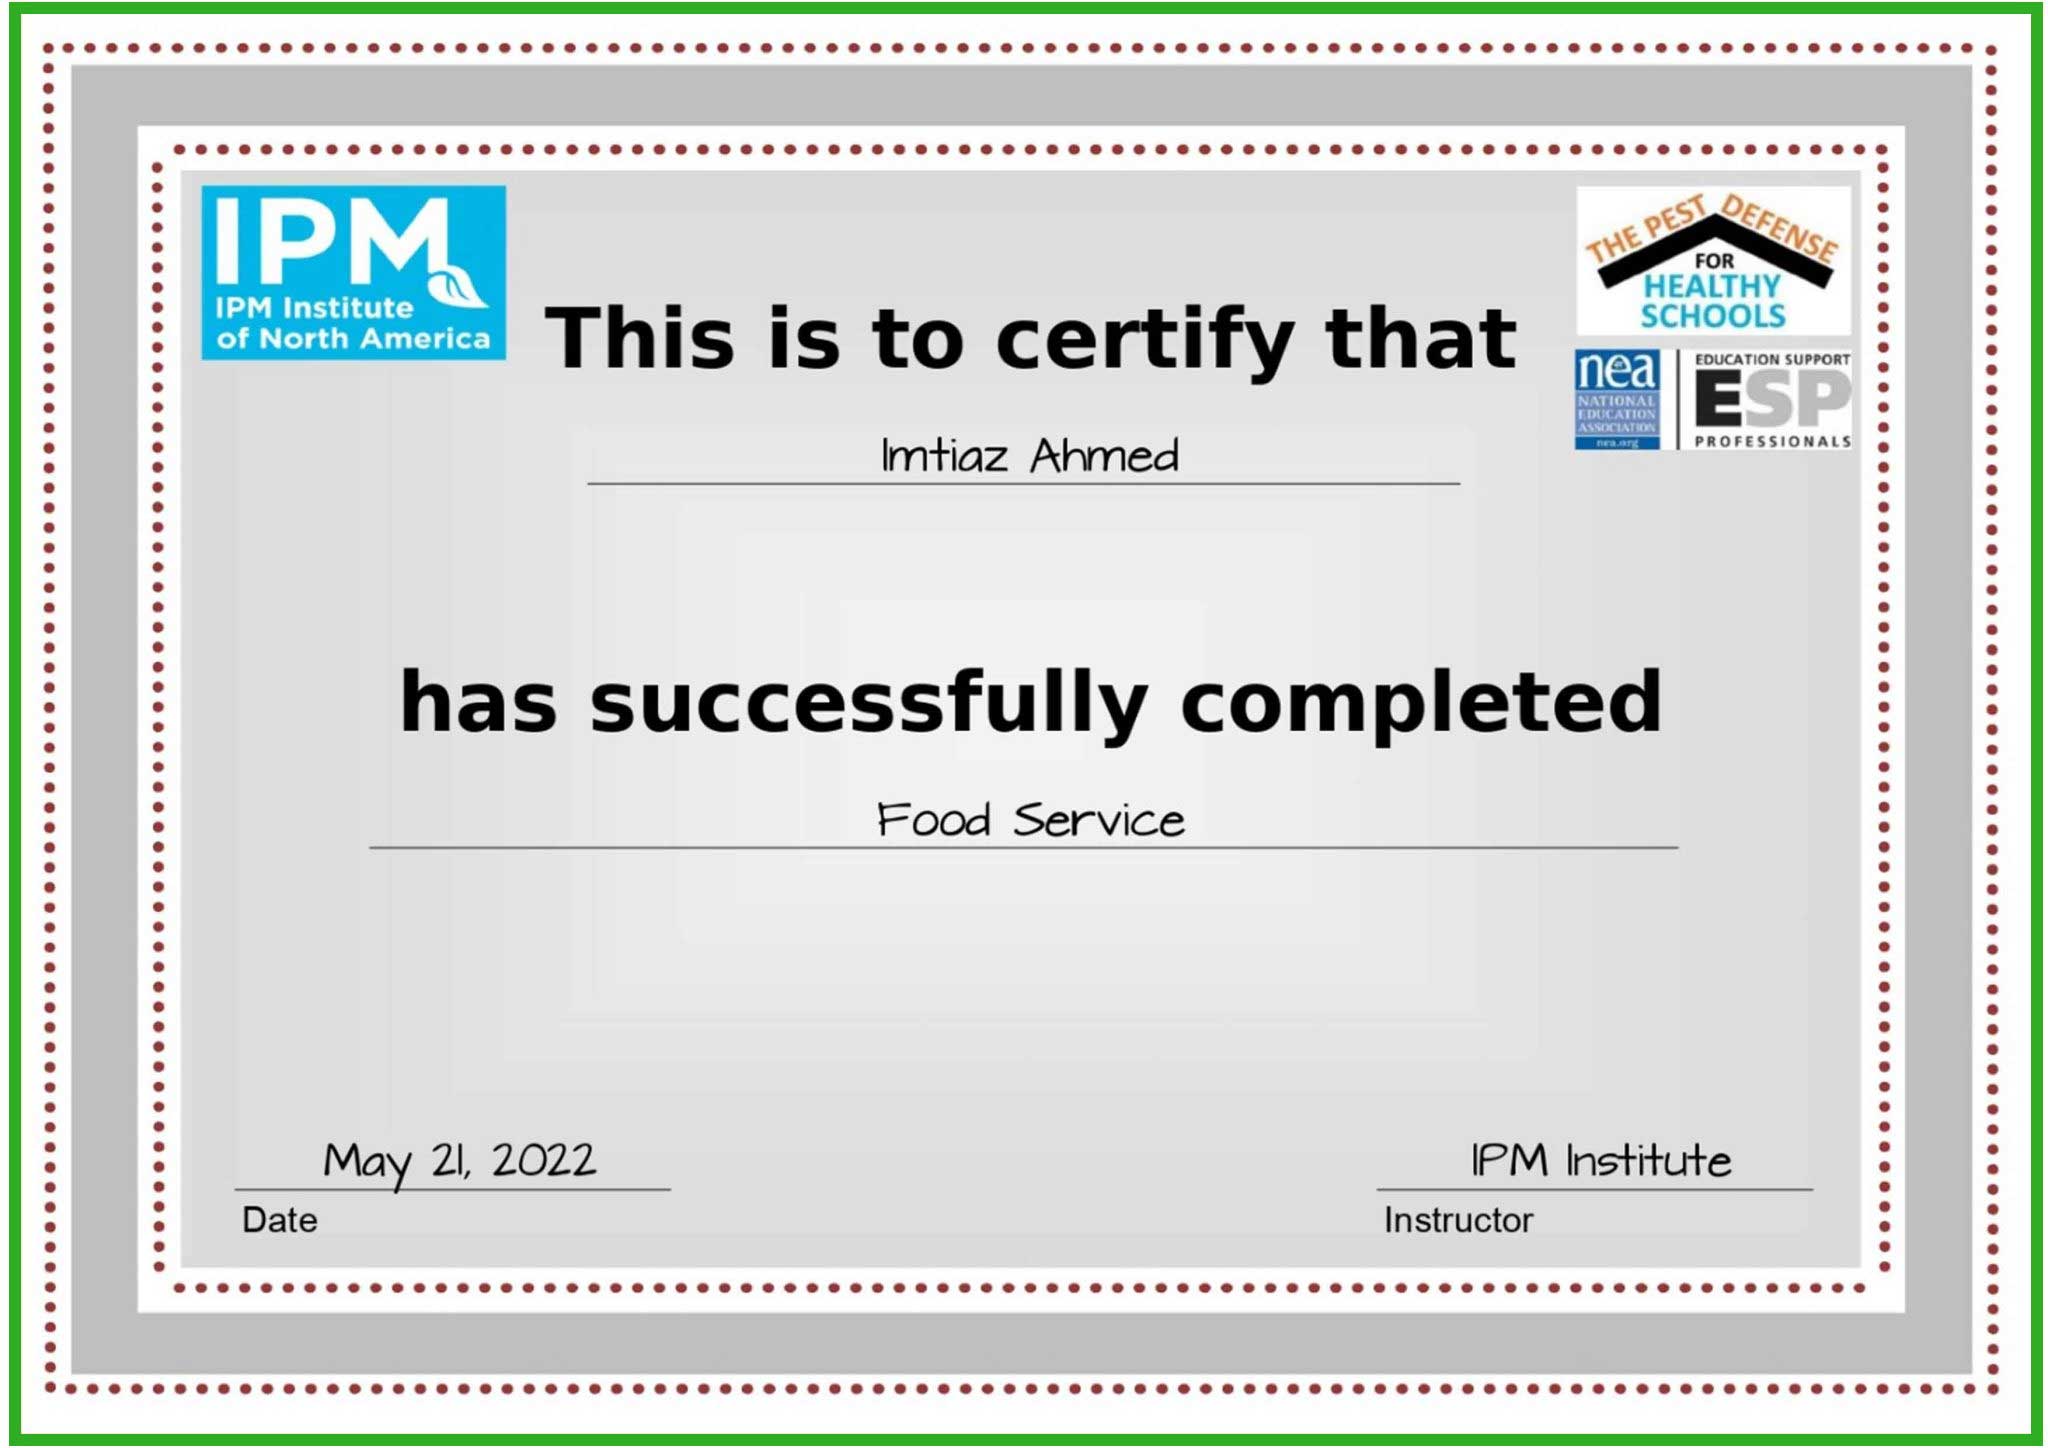 IPM Institute of North America Pestinil Certifications